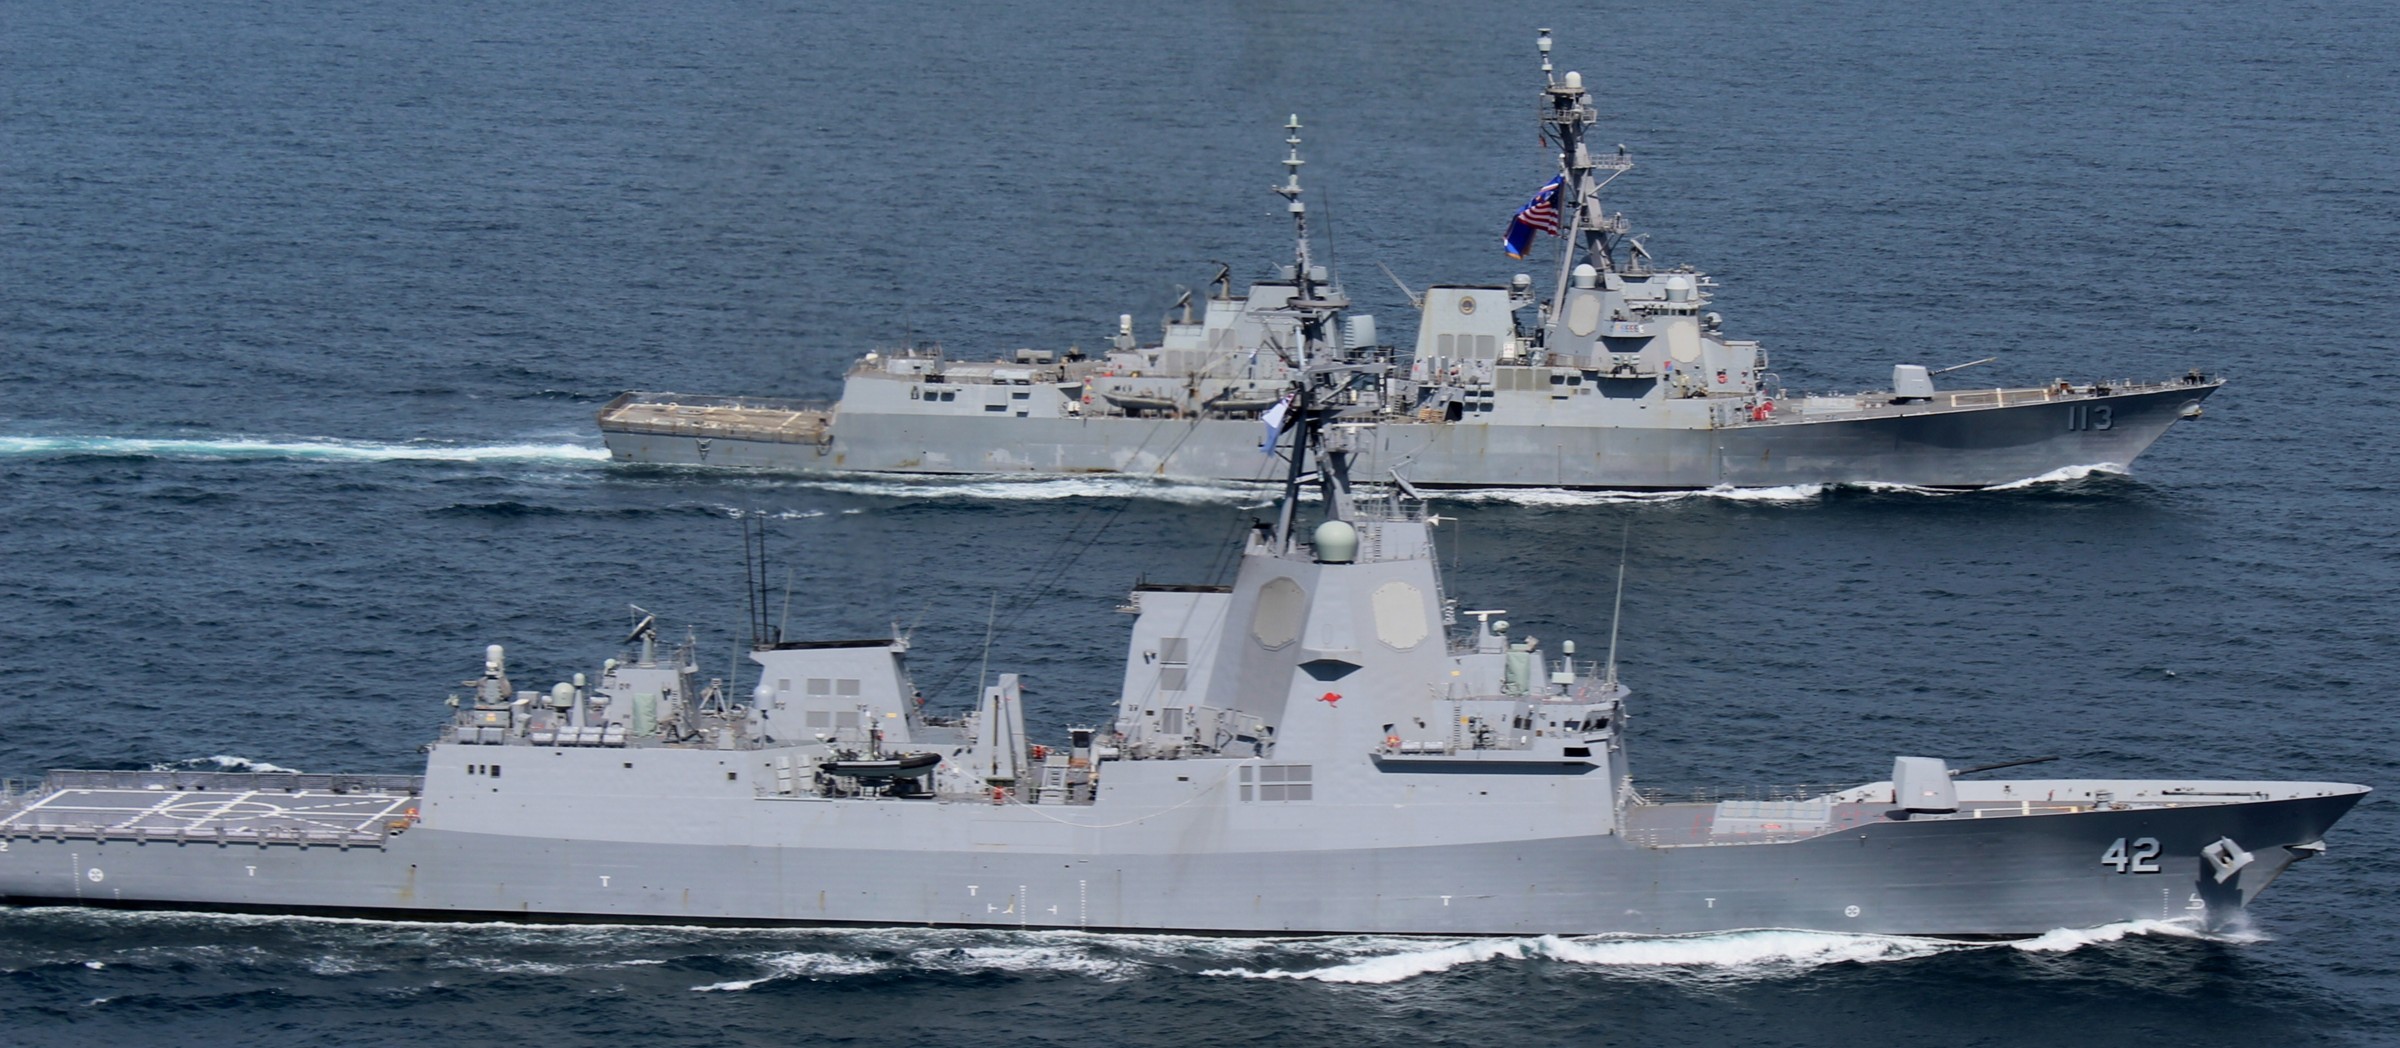 ddgh 42 hmas sydney hobart class guided missile destroyer royal australian navy 05